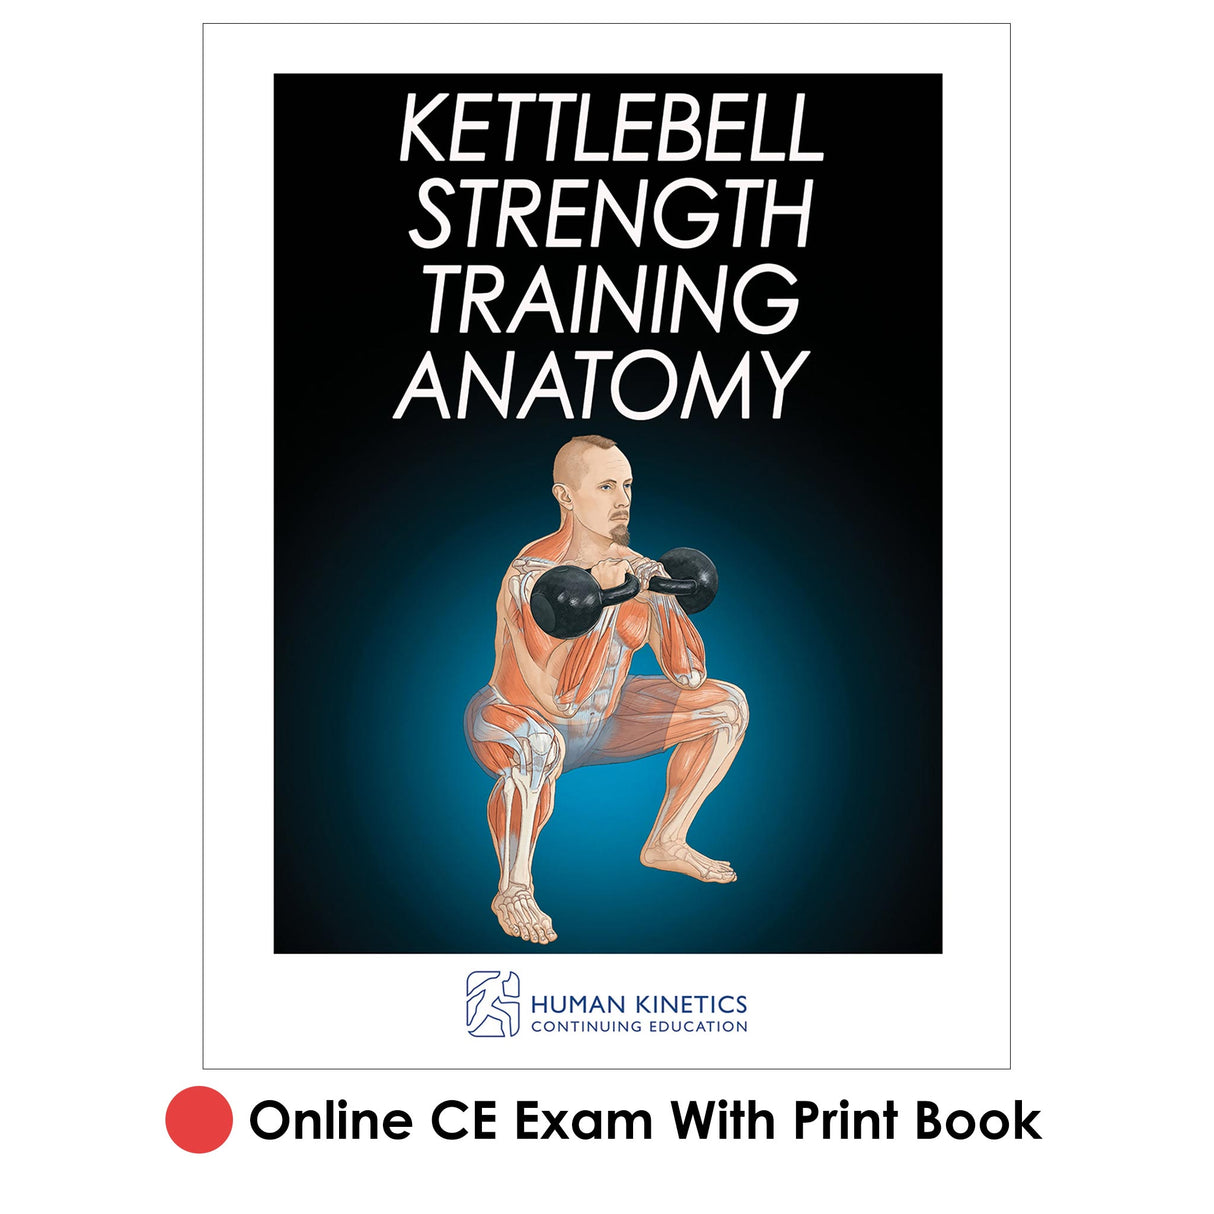 Kettlebell Strength Training Anatomy Online CE Exam With Print Book